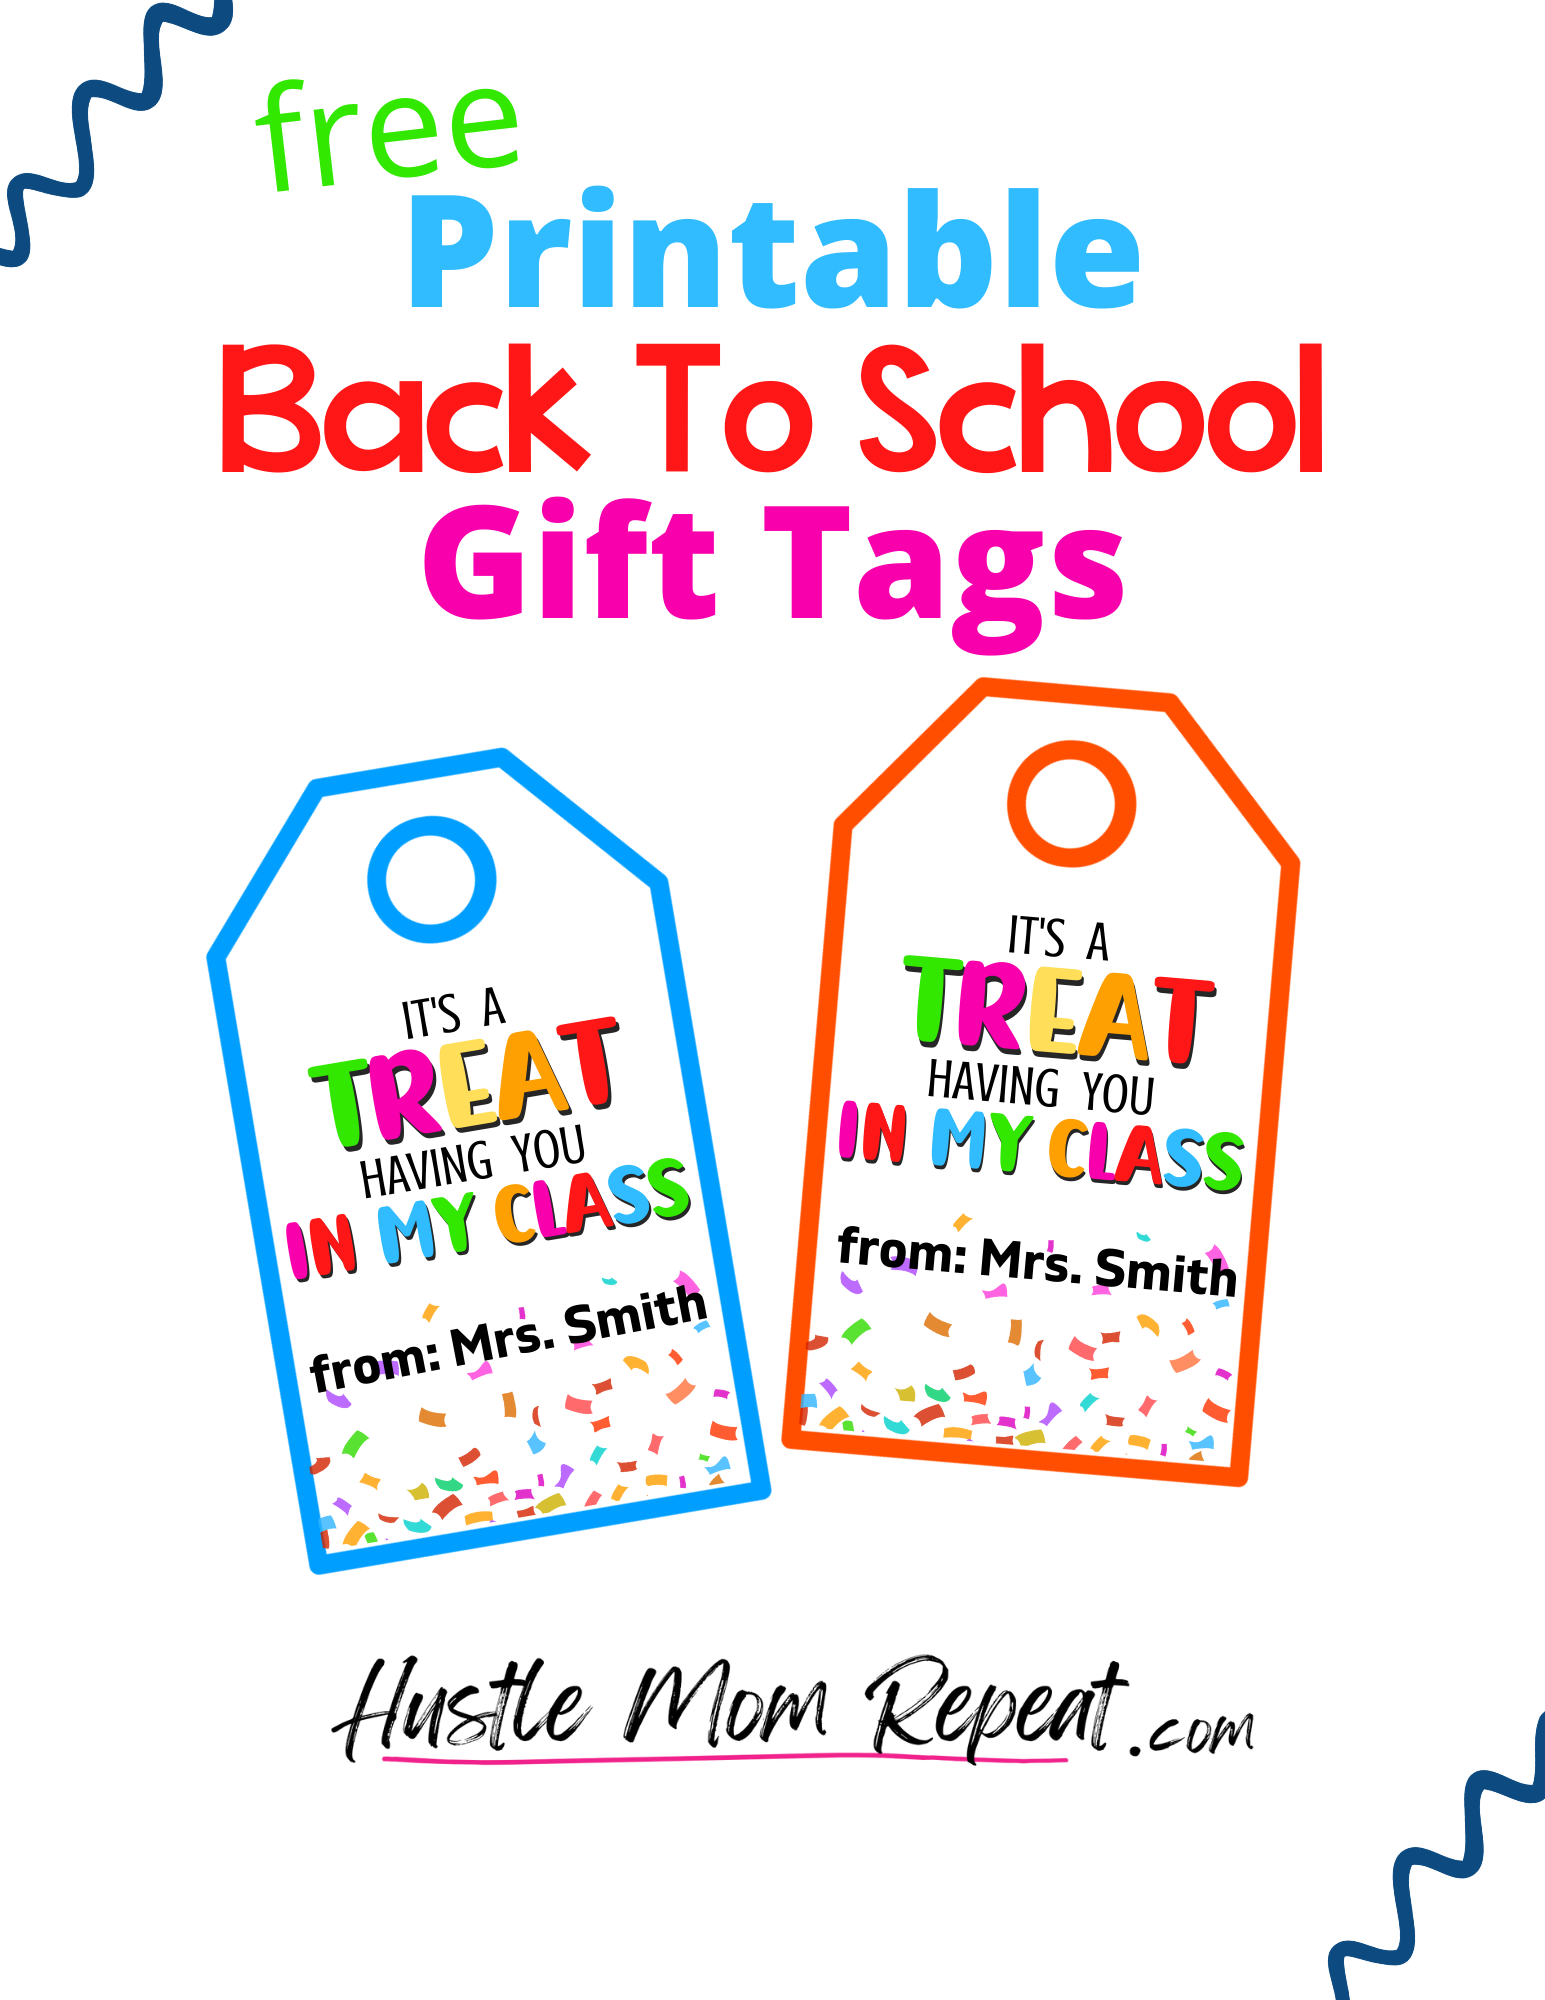 Printable Back To School Treat Tag Hustle Mom Repeat - Free Printable Back To School